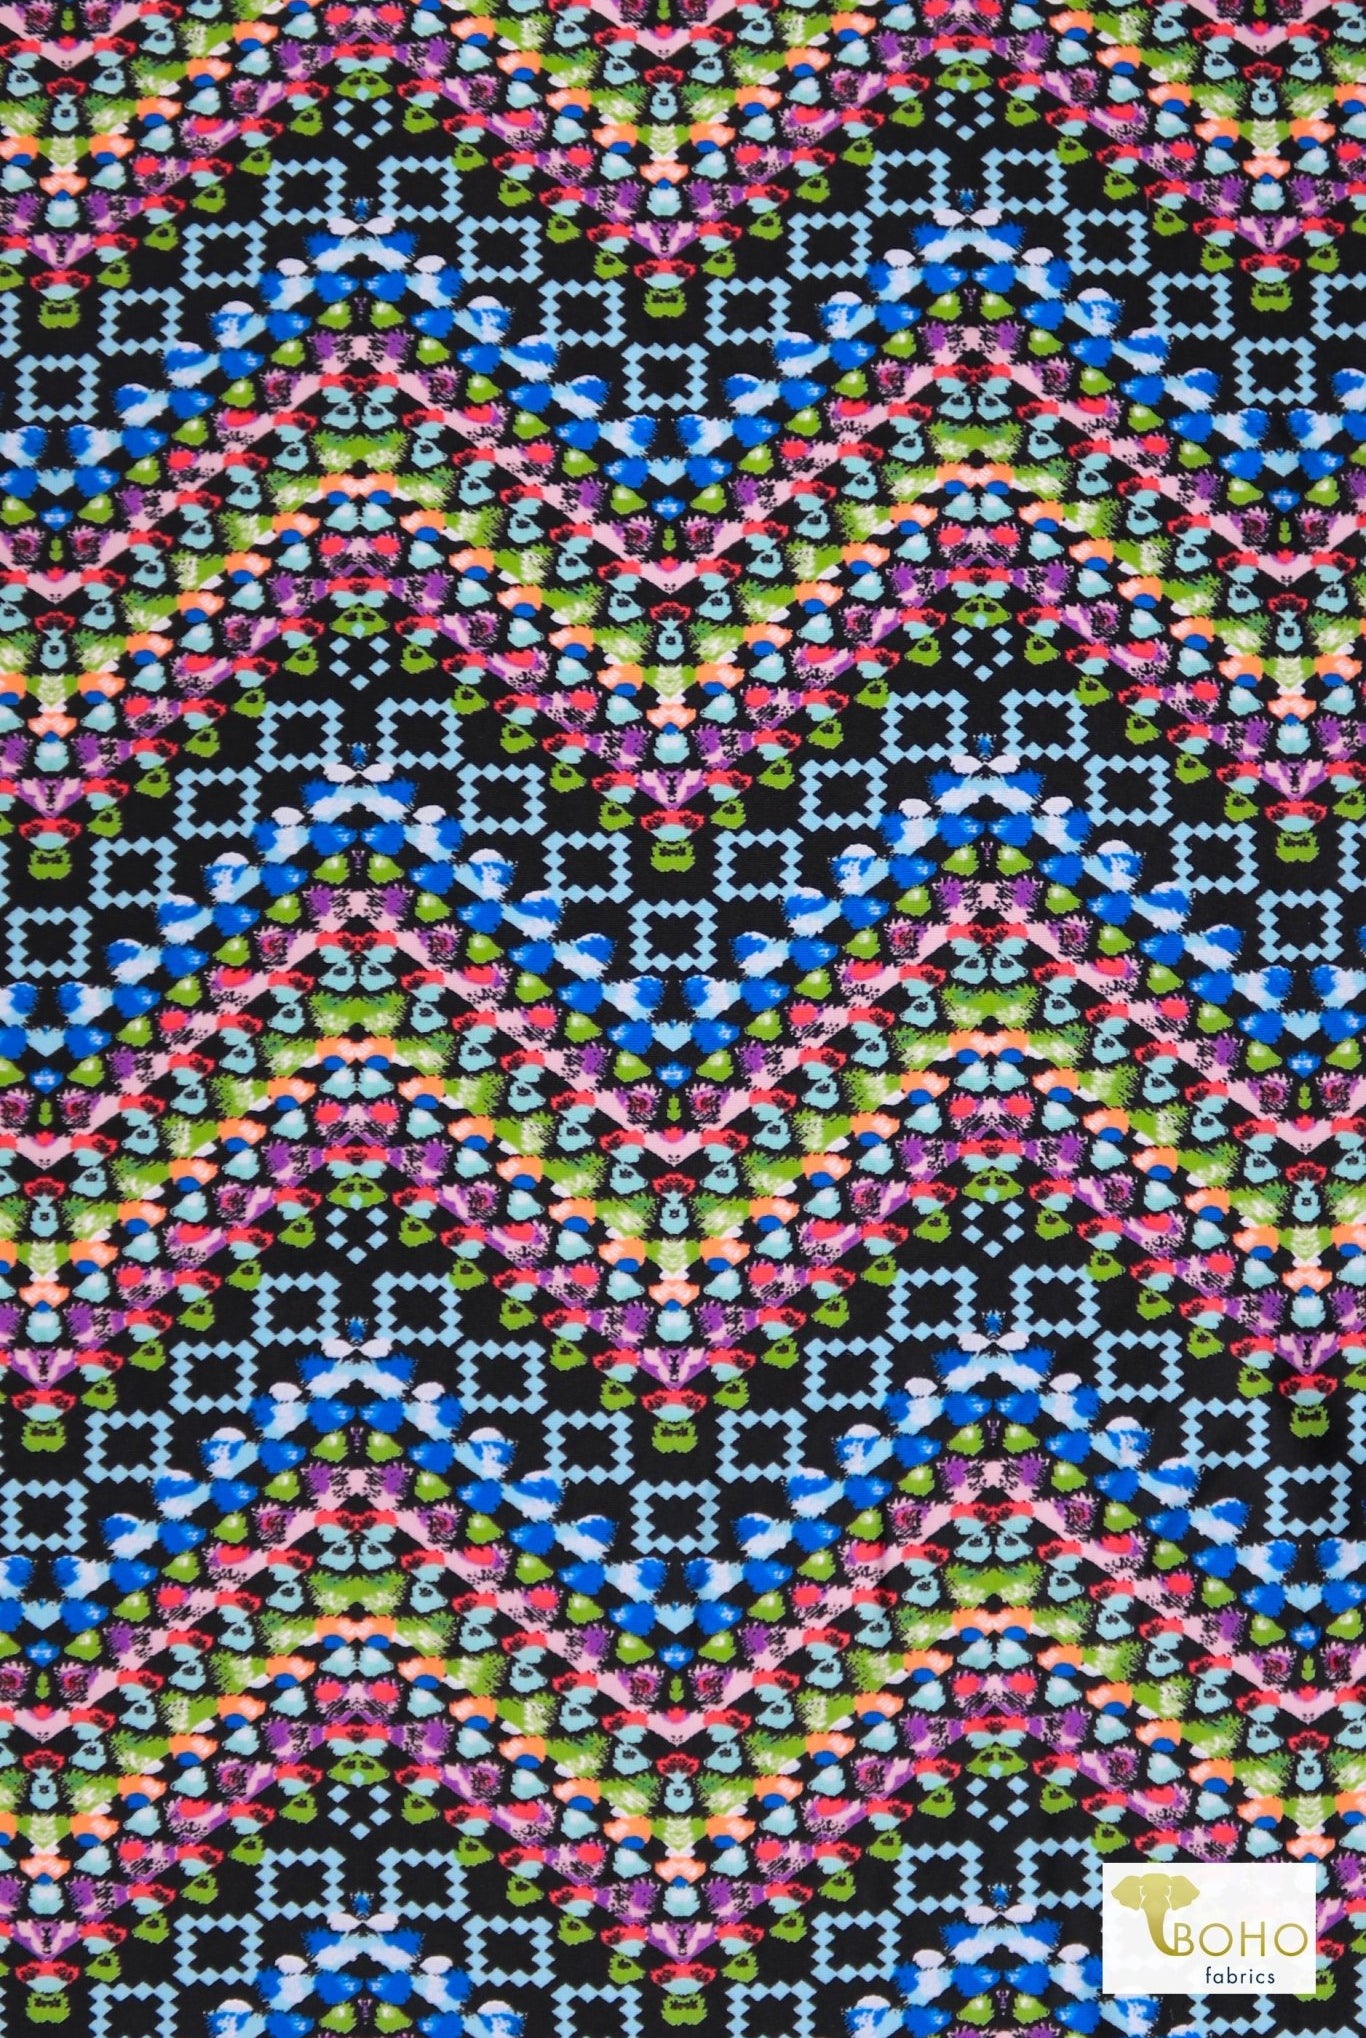 Rainbow Droplets Chevron, Swim/Athletic Knit Fabric - Boho Fabrics - Swim Knit, Printed Fabric